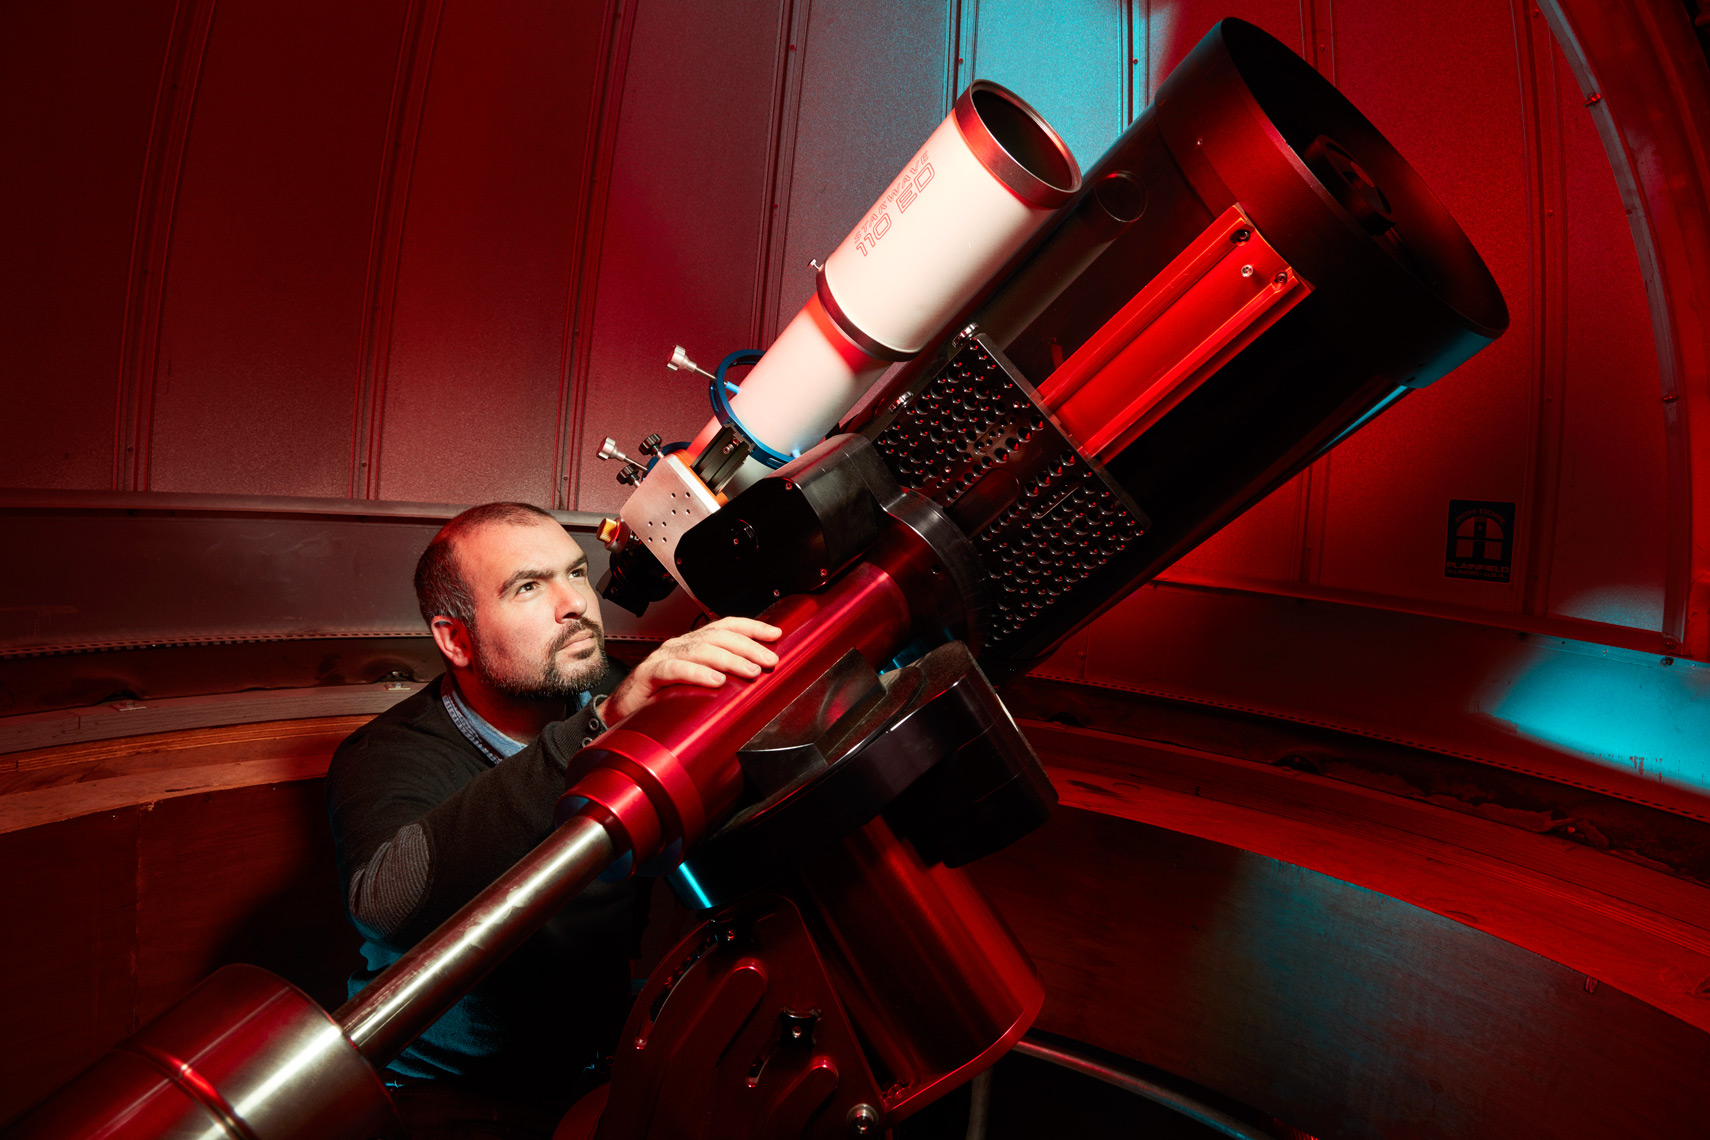 Guillem De Anglada / Astrophysicist Wired magazine